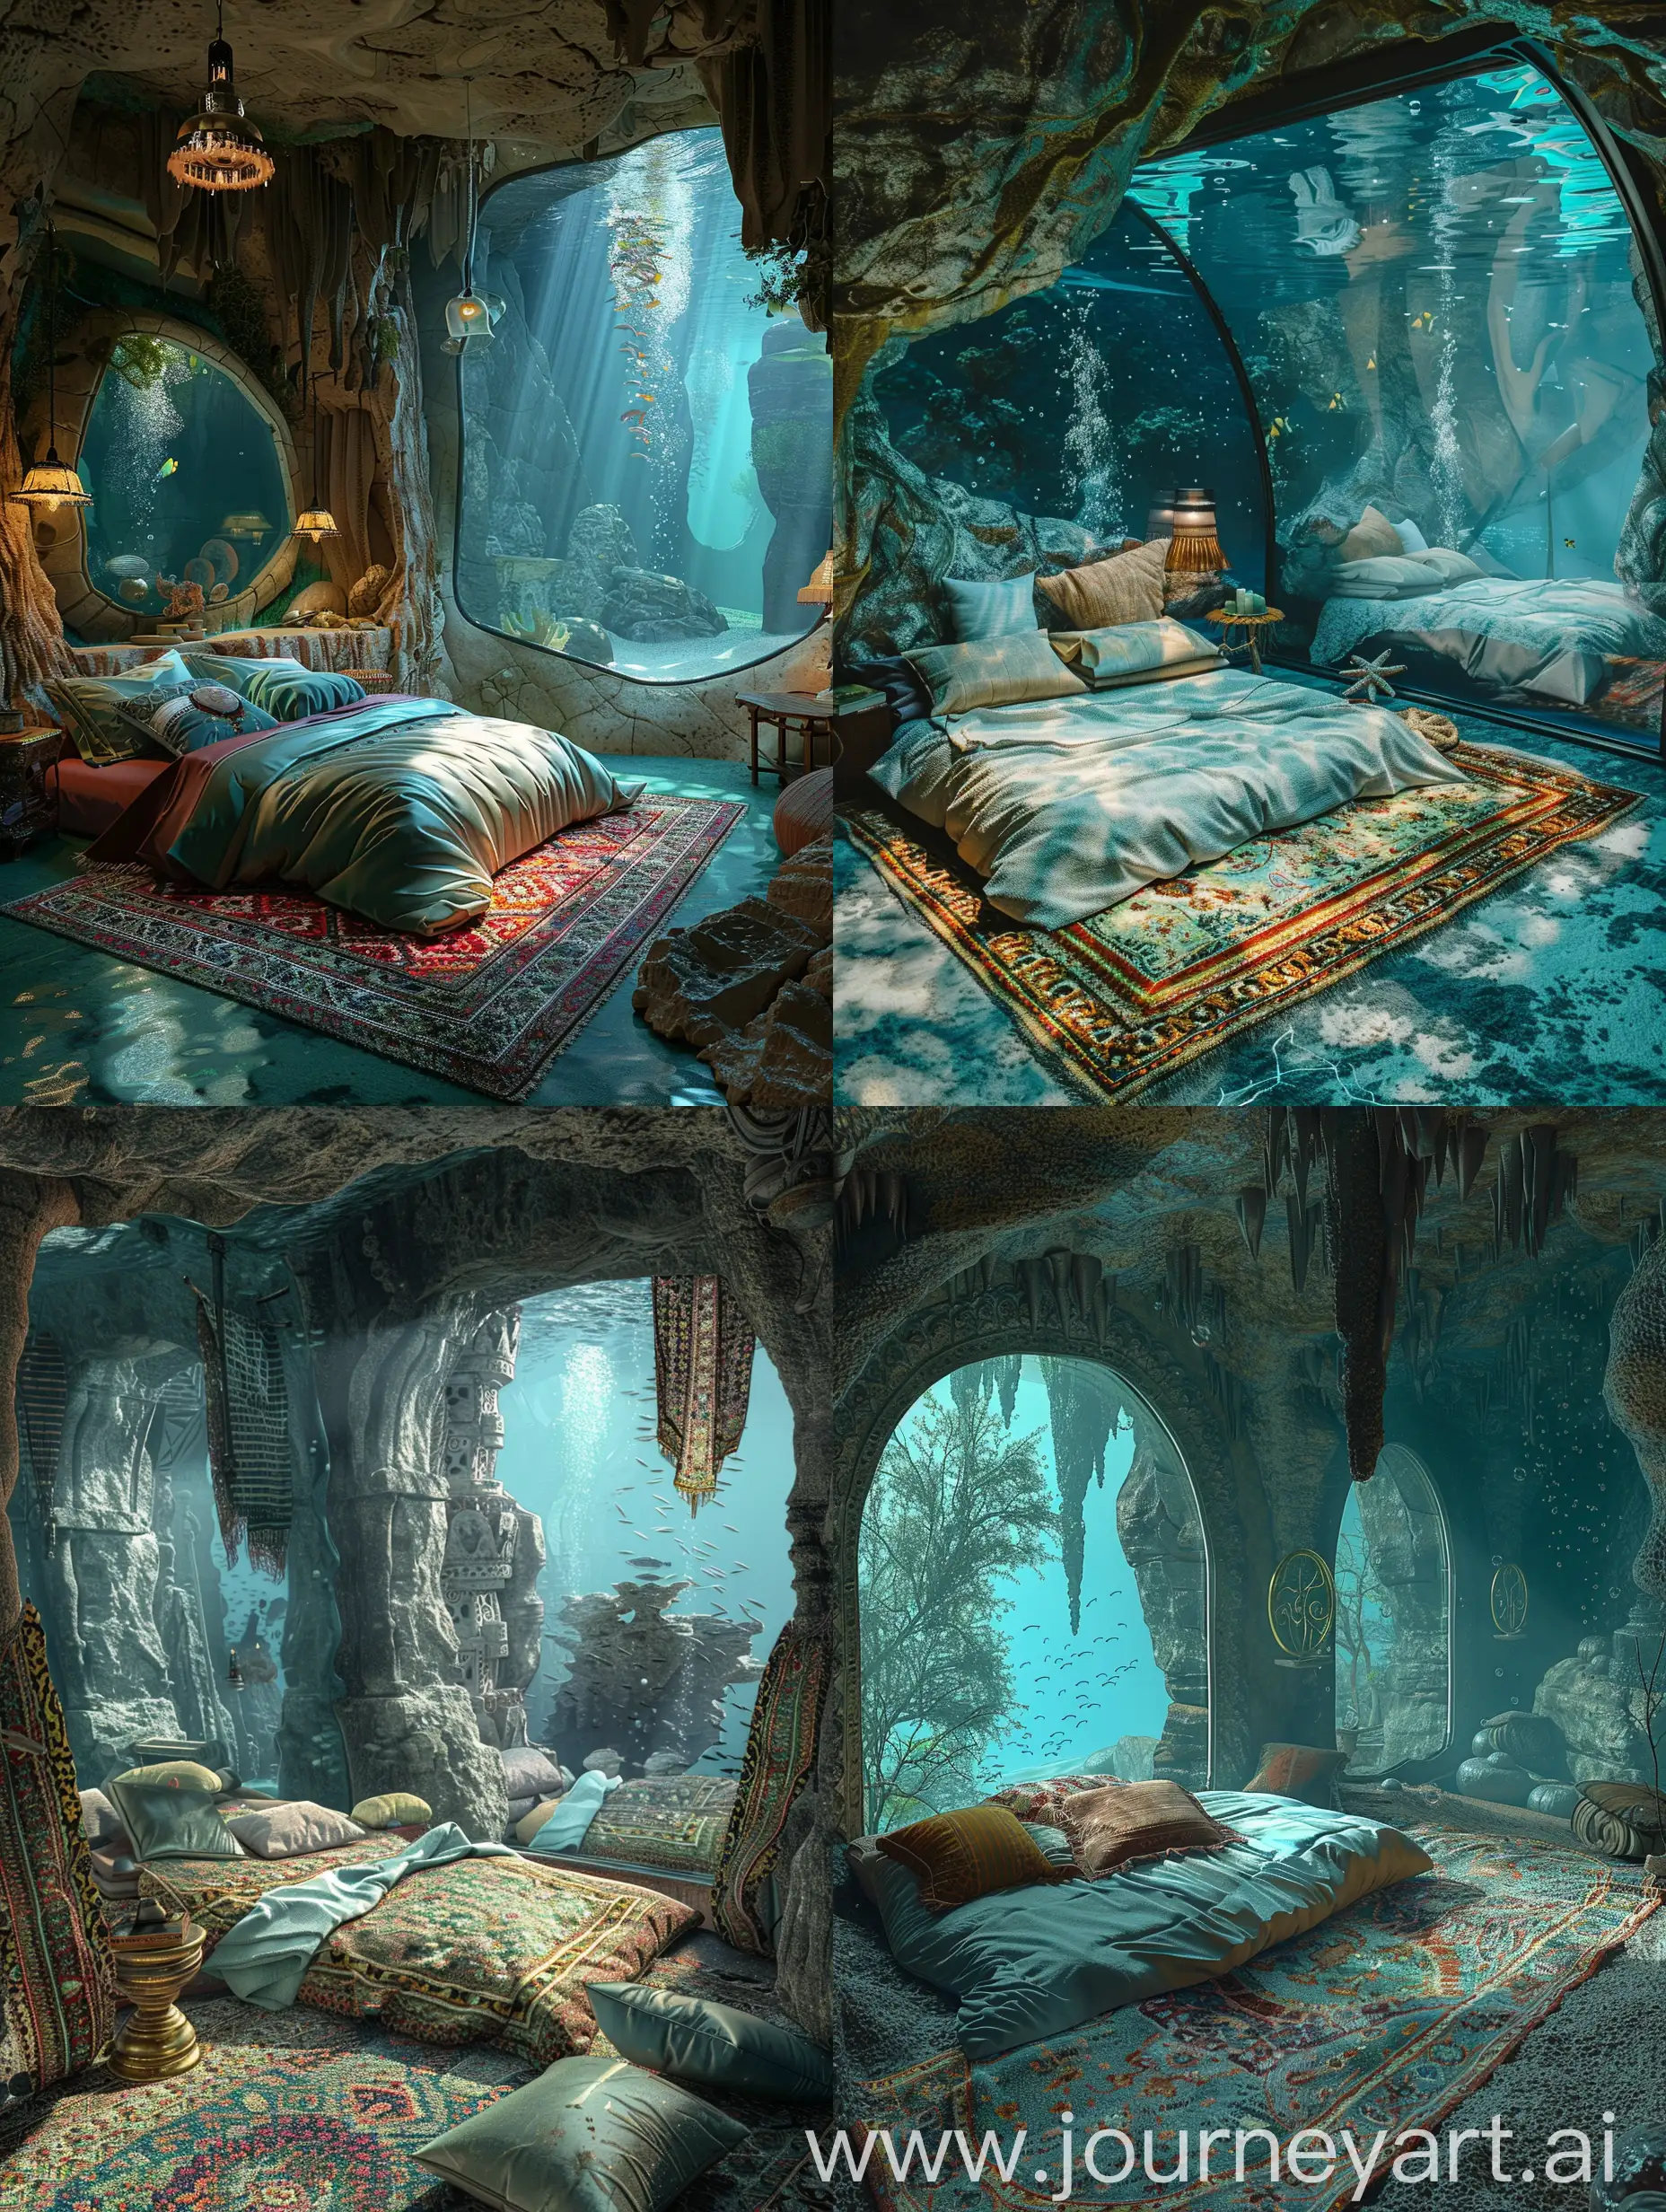 Surreal-Underwater-Cave-Bedroom-Interior-with-Bohemian-Warmth